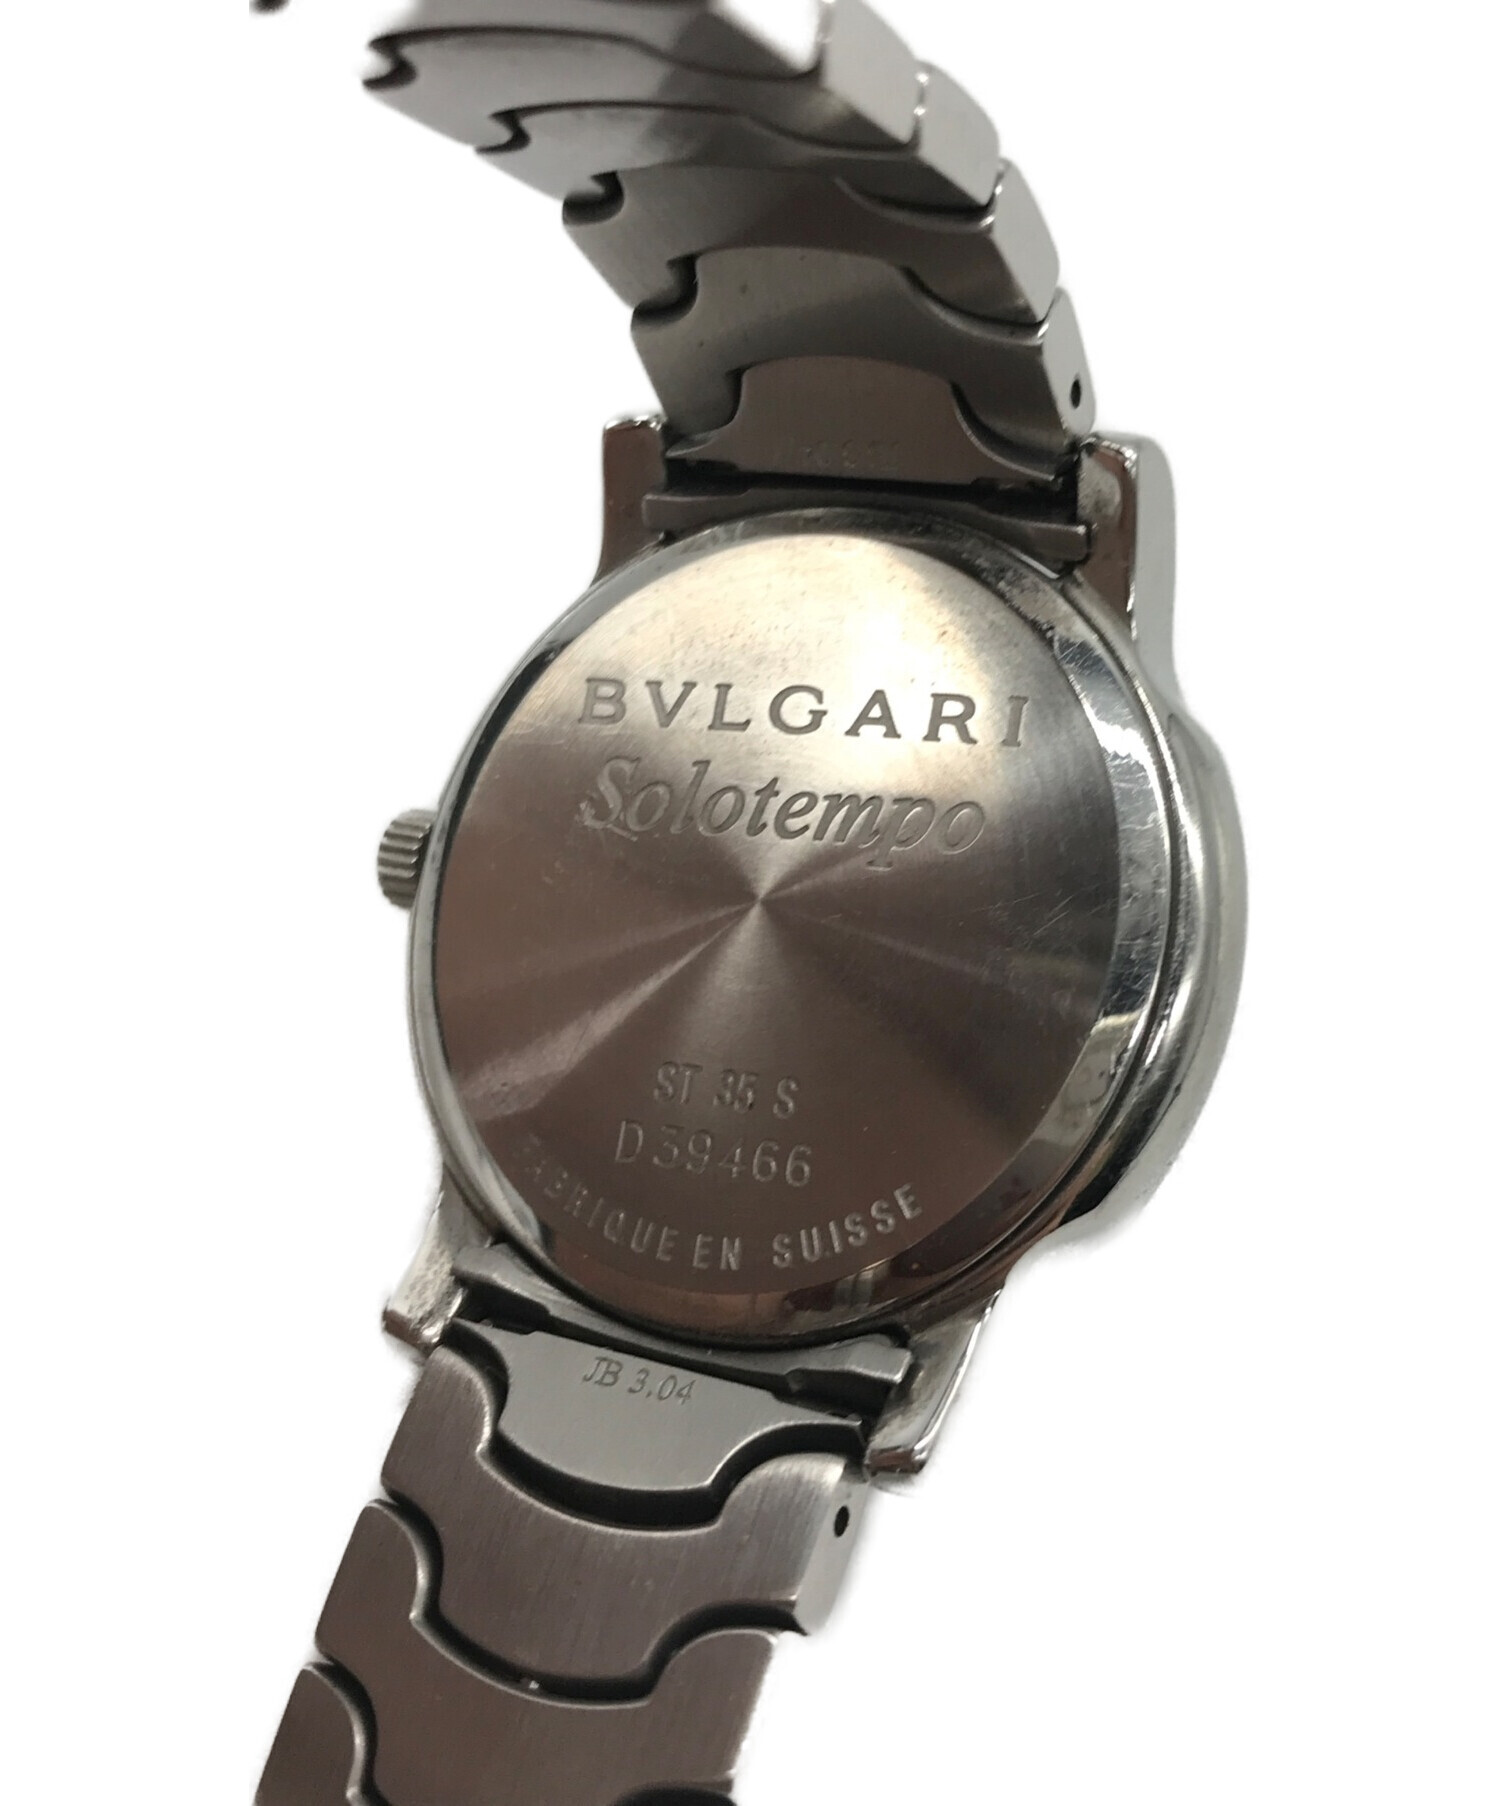 BVLGARI (ブルガリ) ソロテンポ 腕時計　ST 35S 動作確認済み